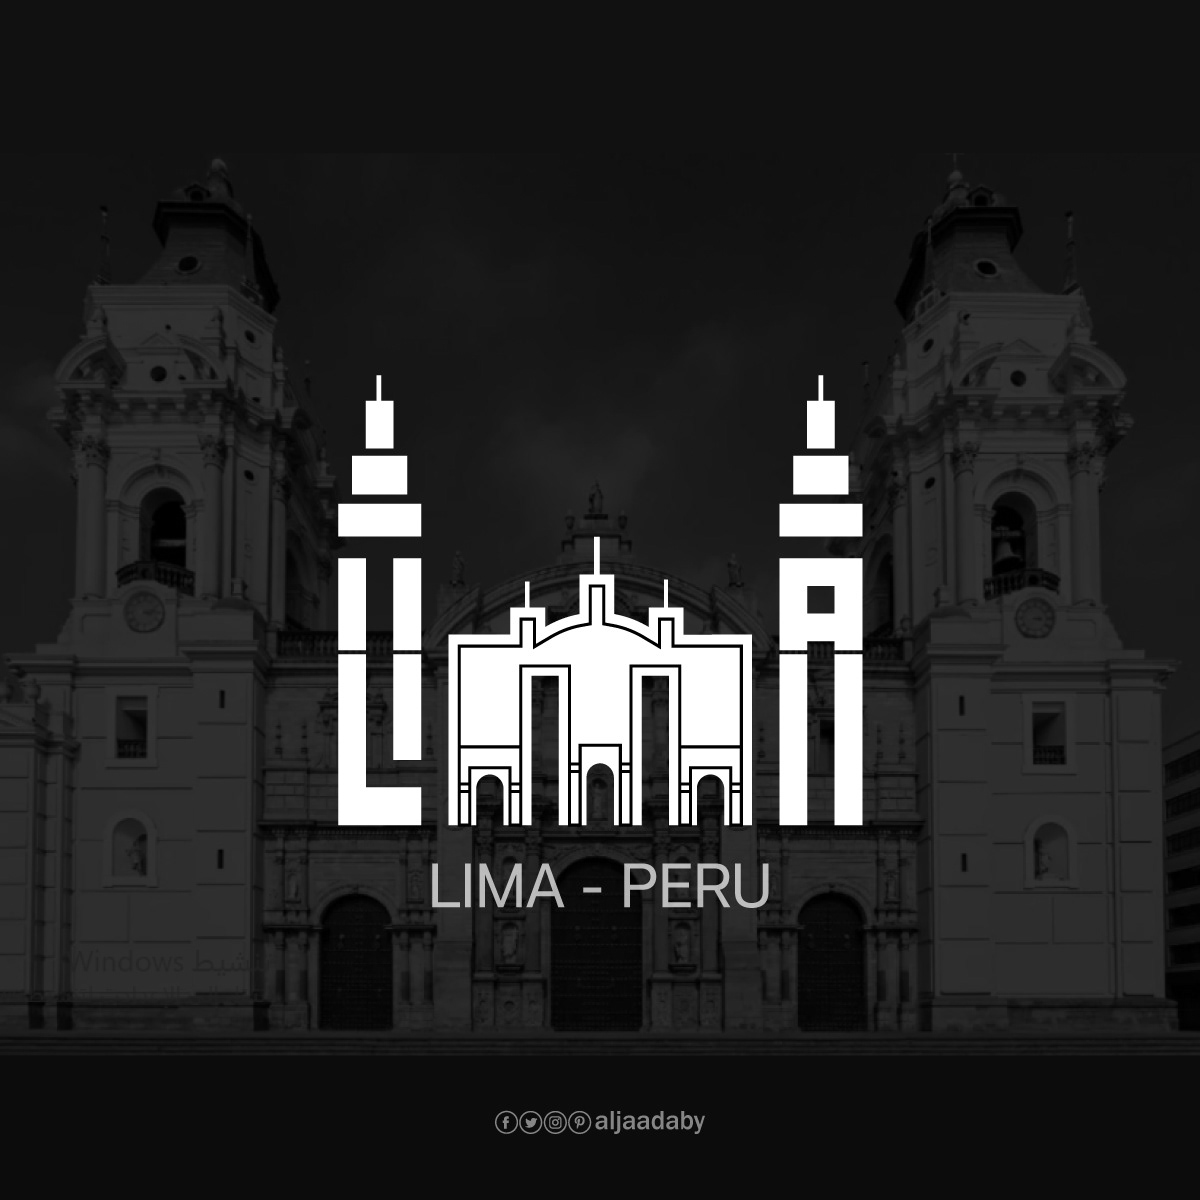 Typographic city logos based on their famous landmarks - Lima